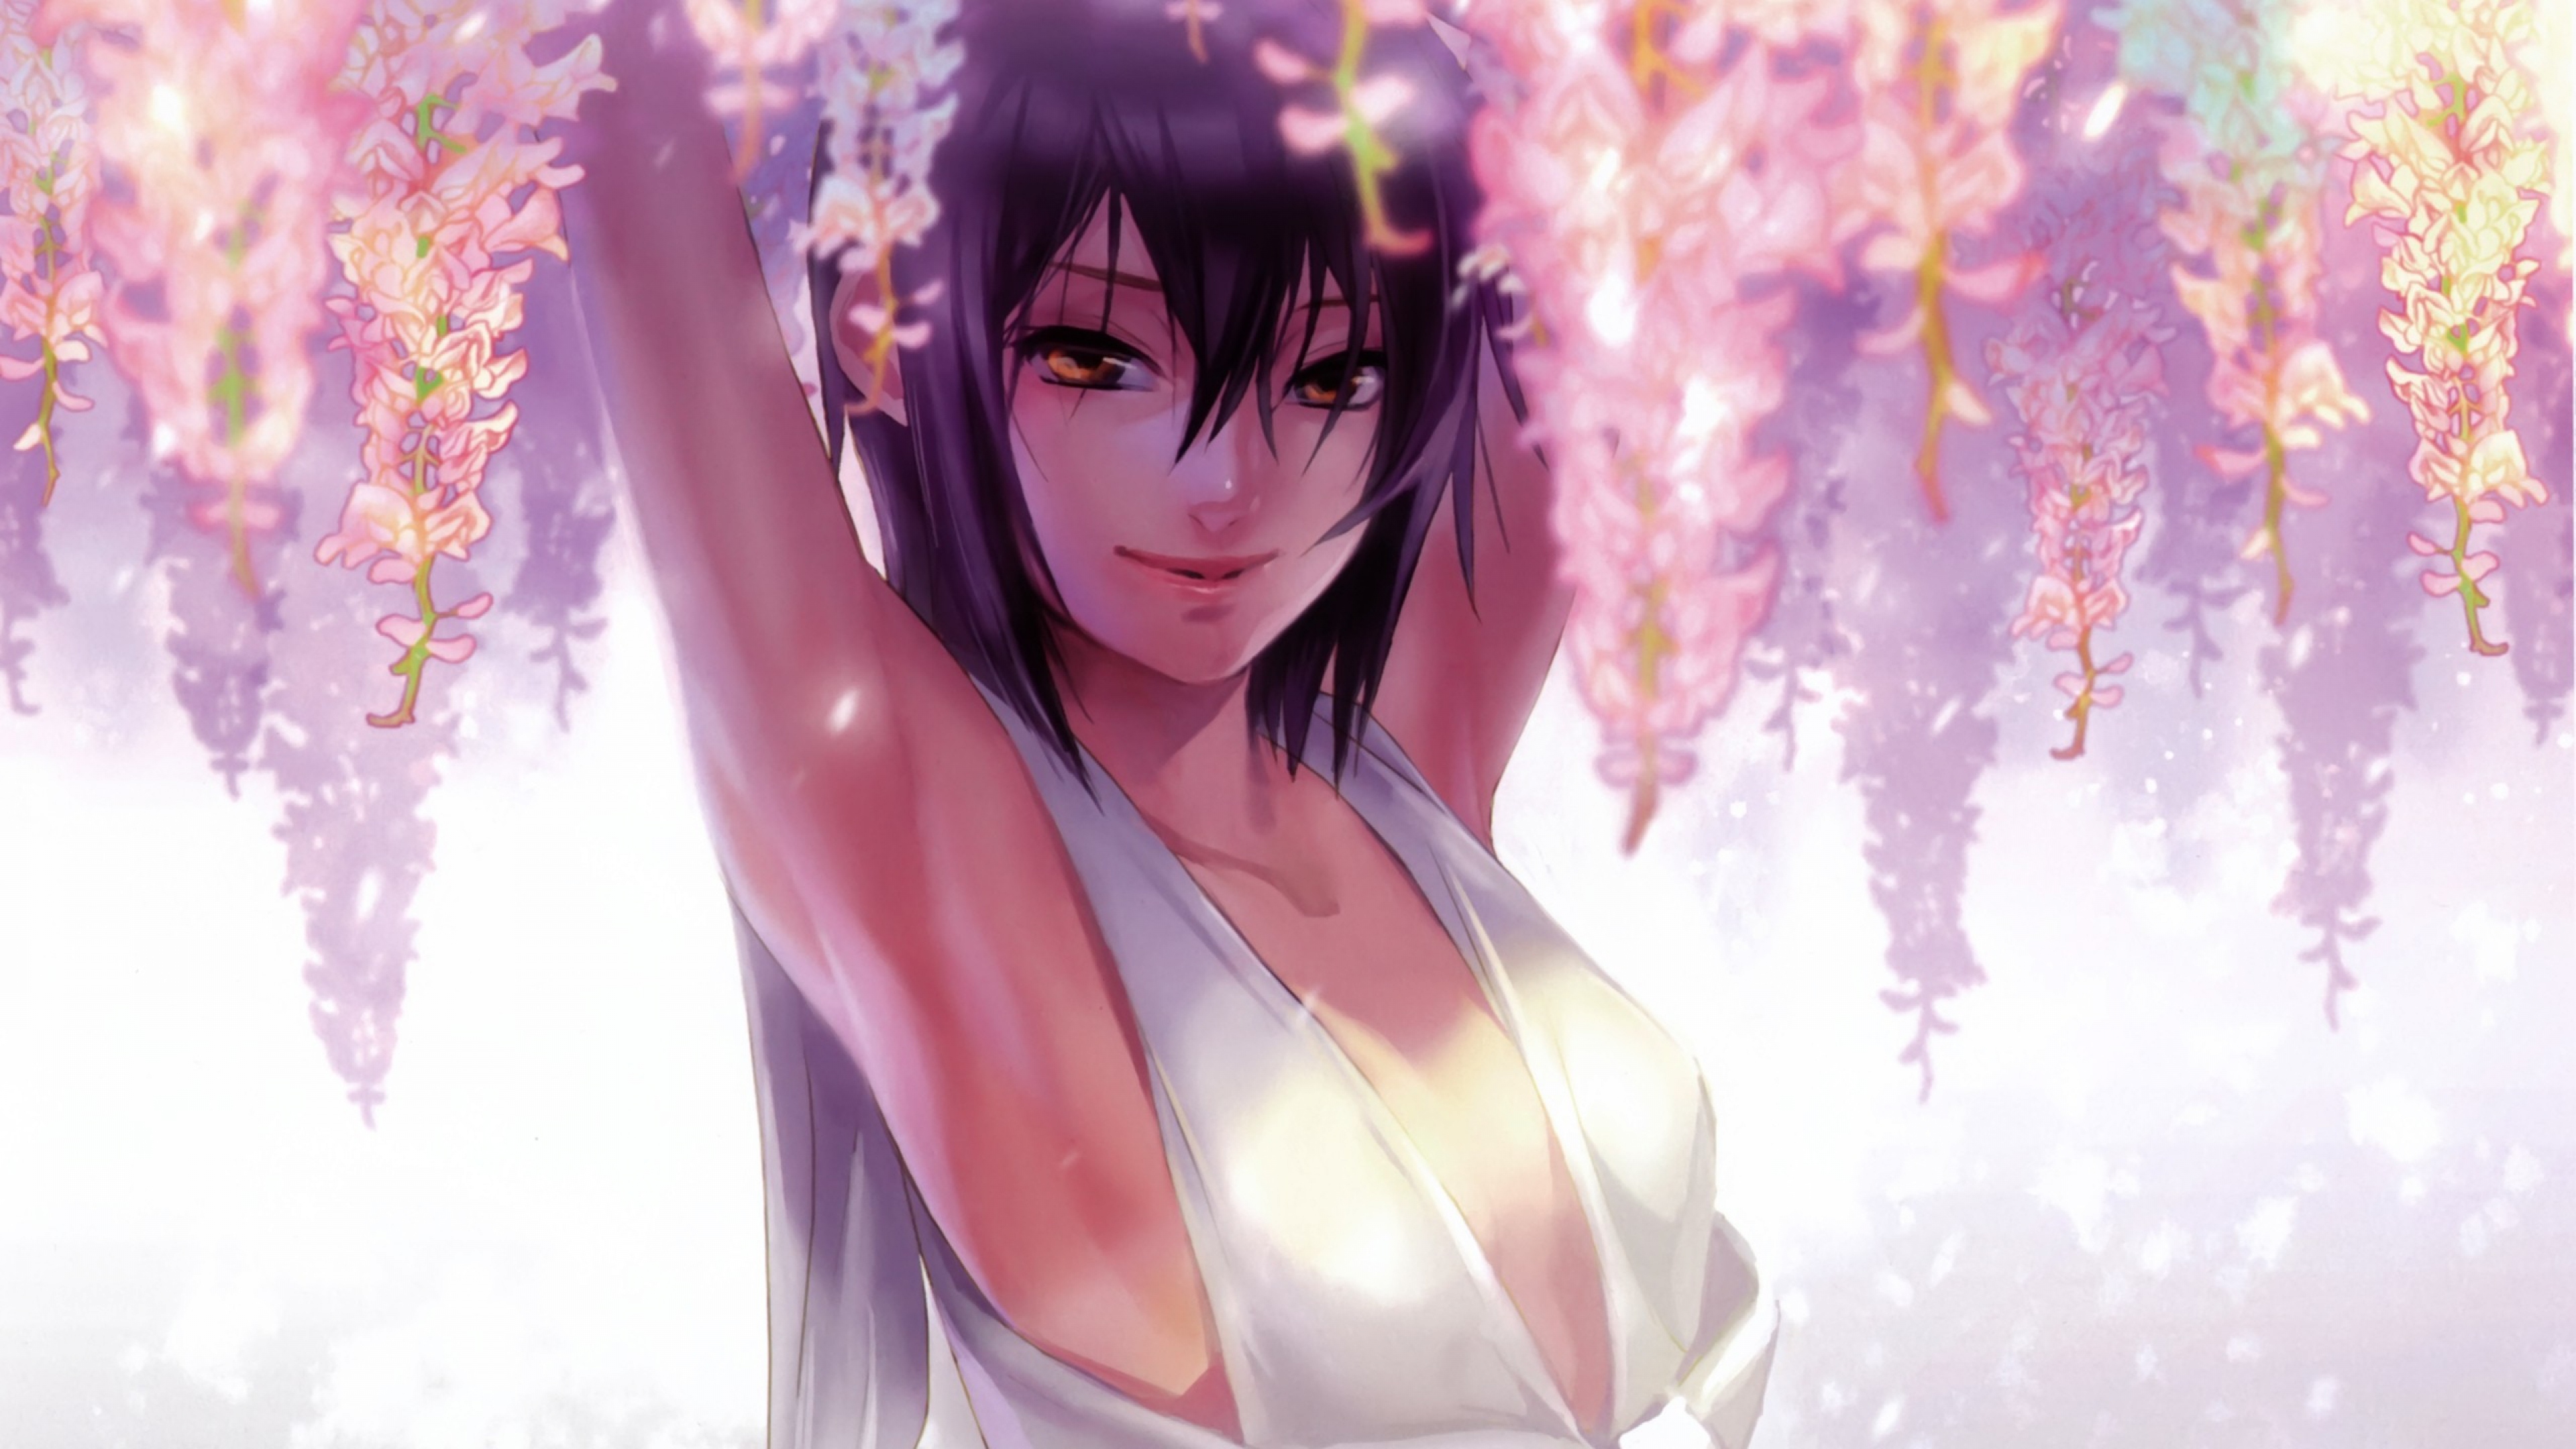 Download Wallpaper 3840x2160 anime girl sun spring image smile 4K